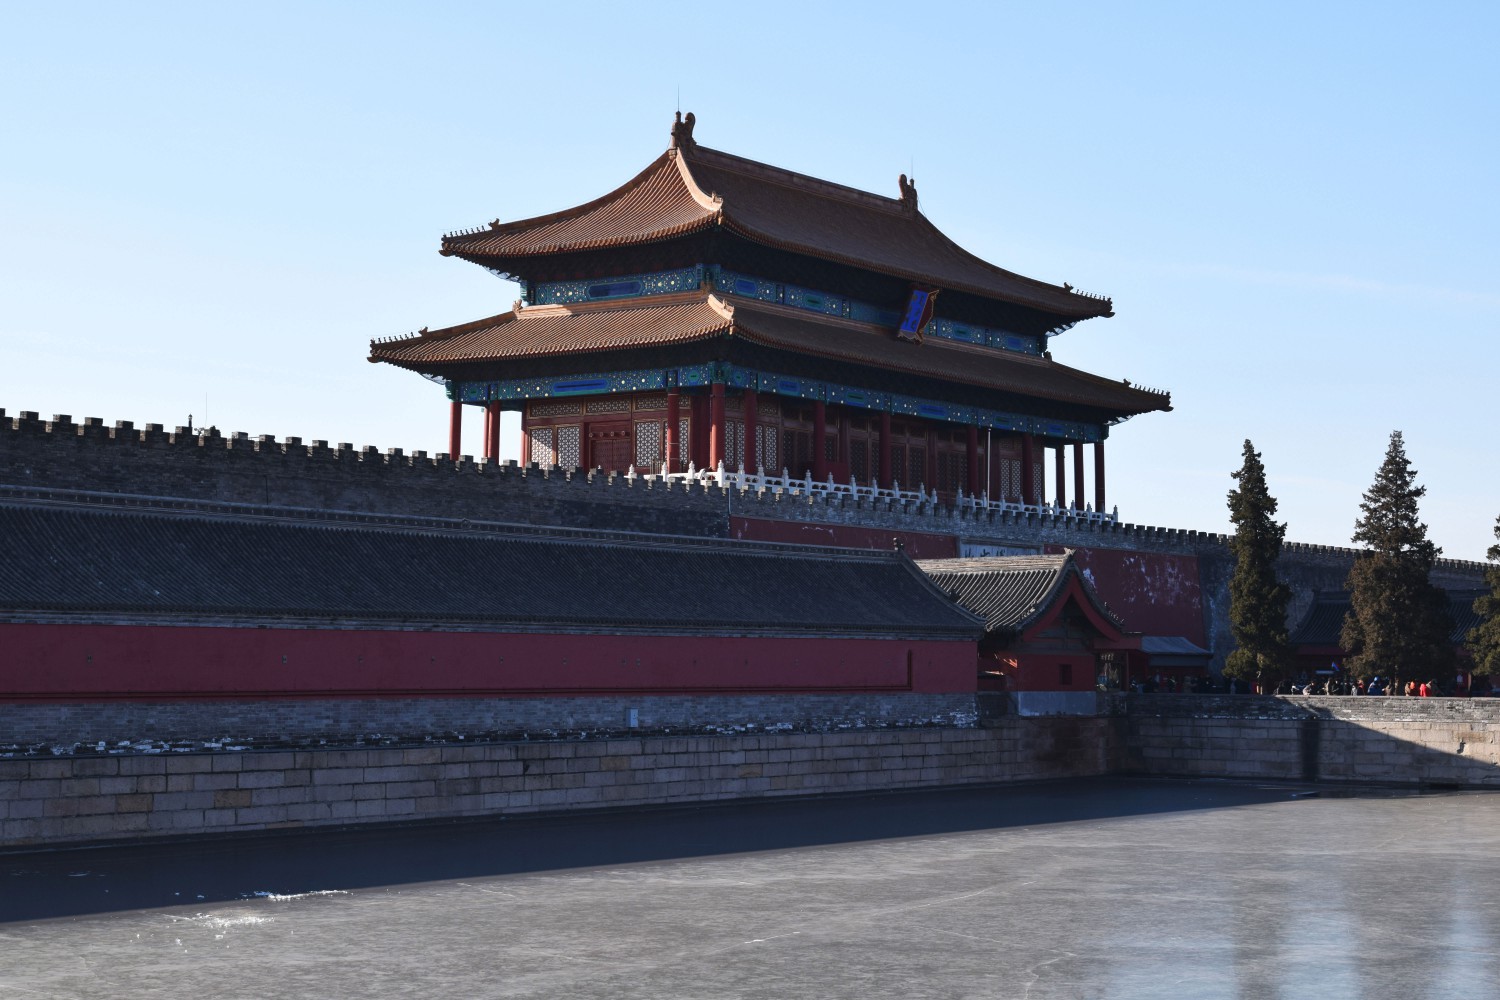 Reise nach Henan / China - Ankunft in Peking - Verbotene Stadt